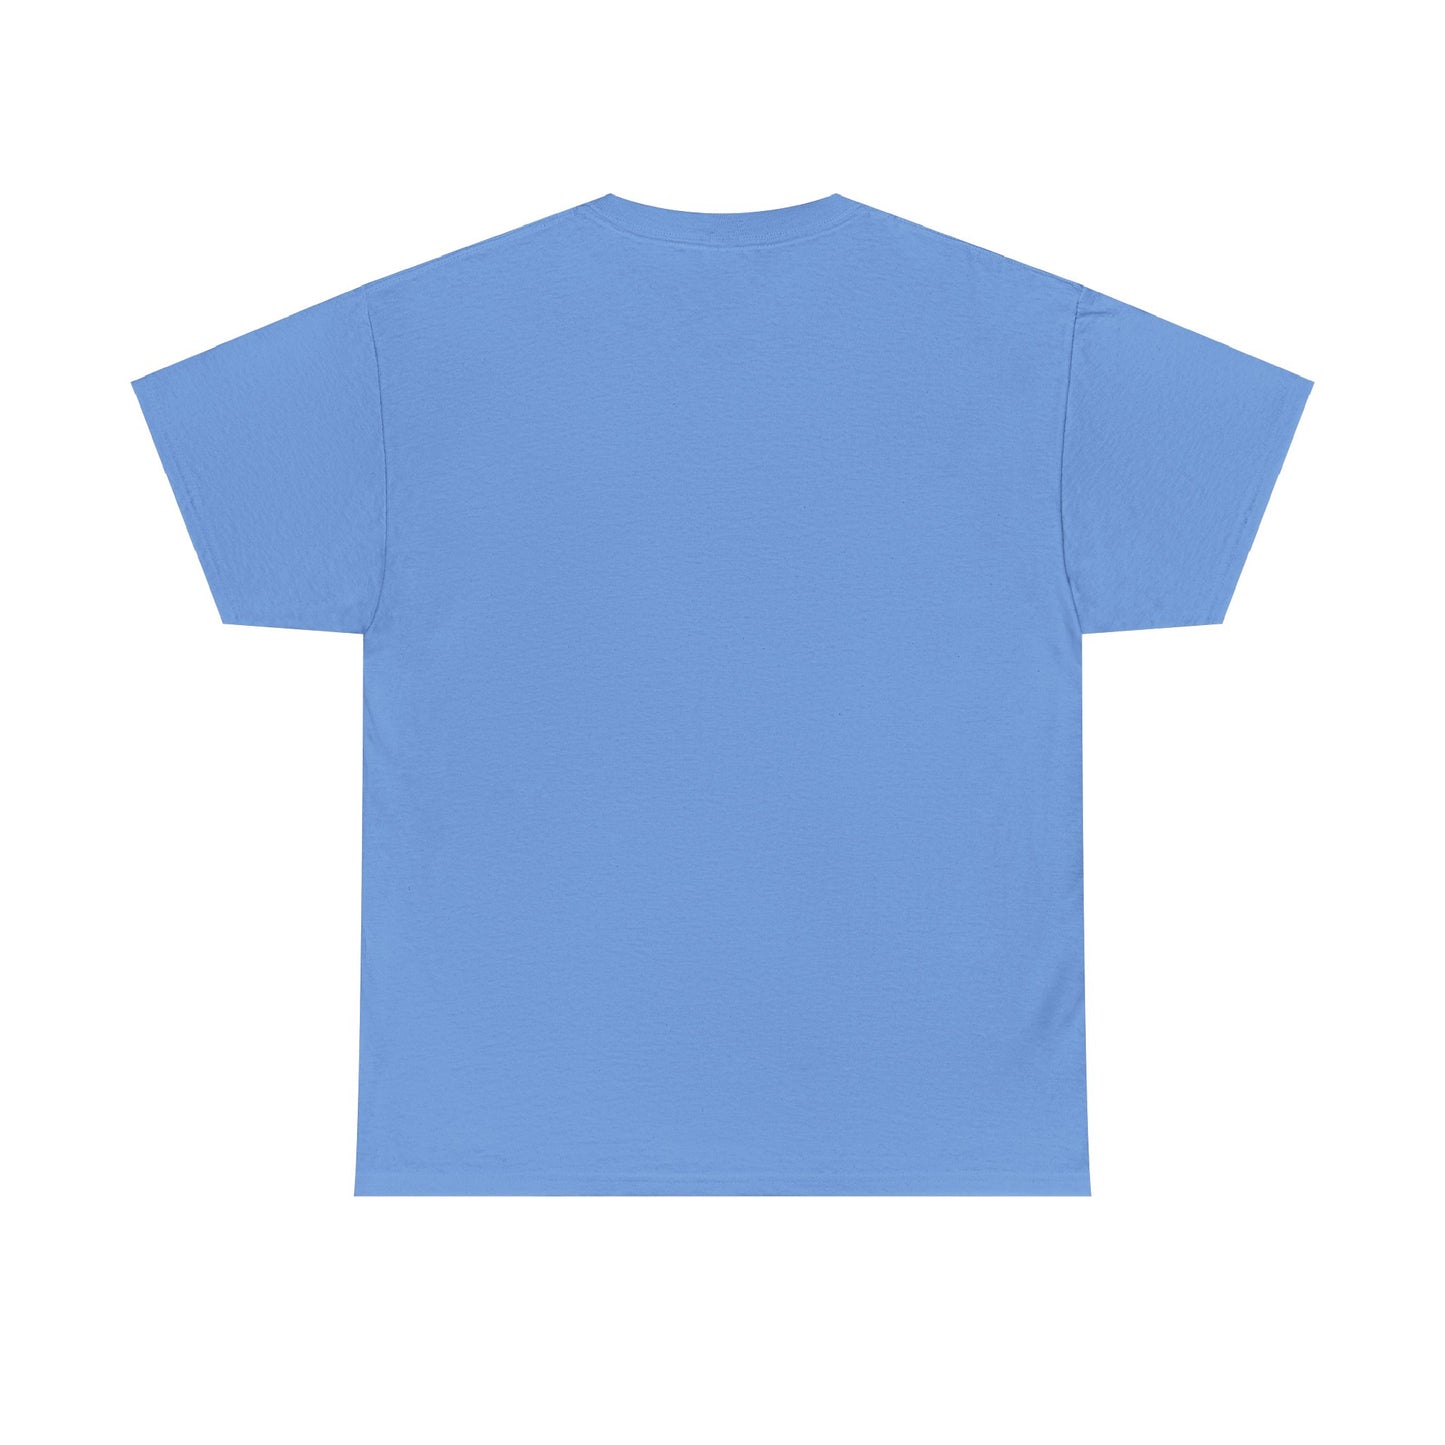 Unisex Heavy Cotton Graphic design (Accelerate) T-shirt